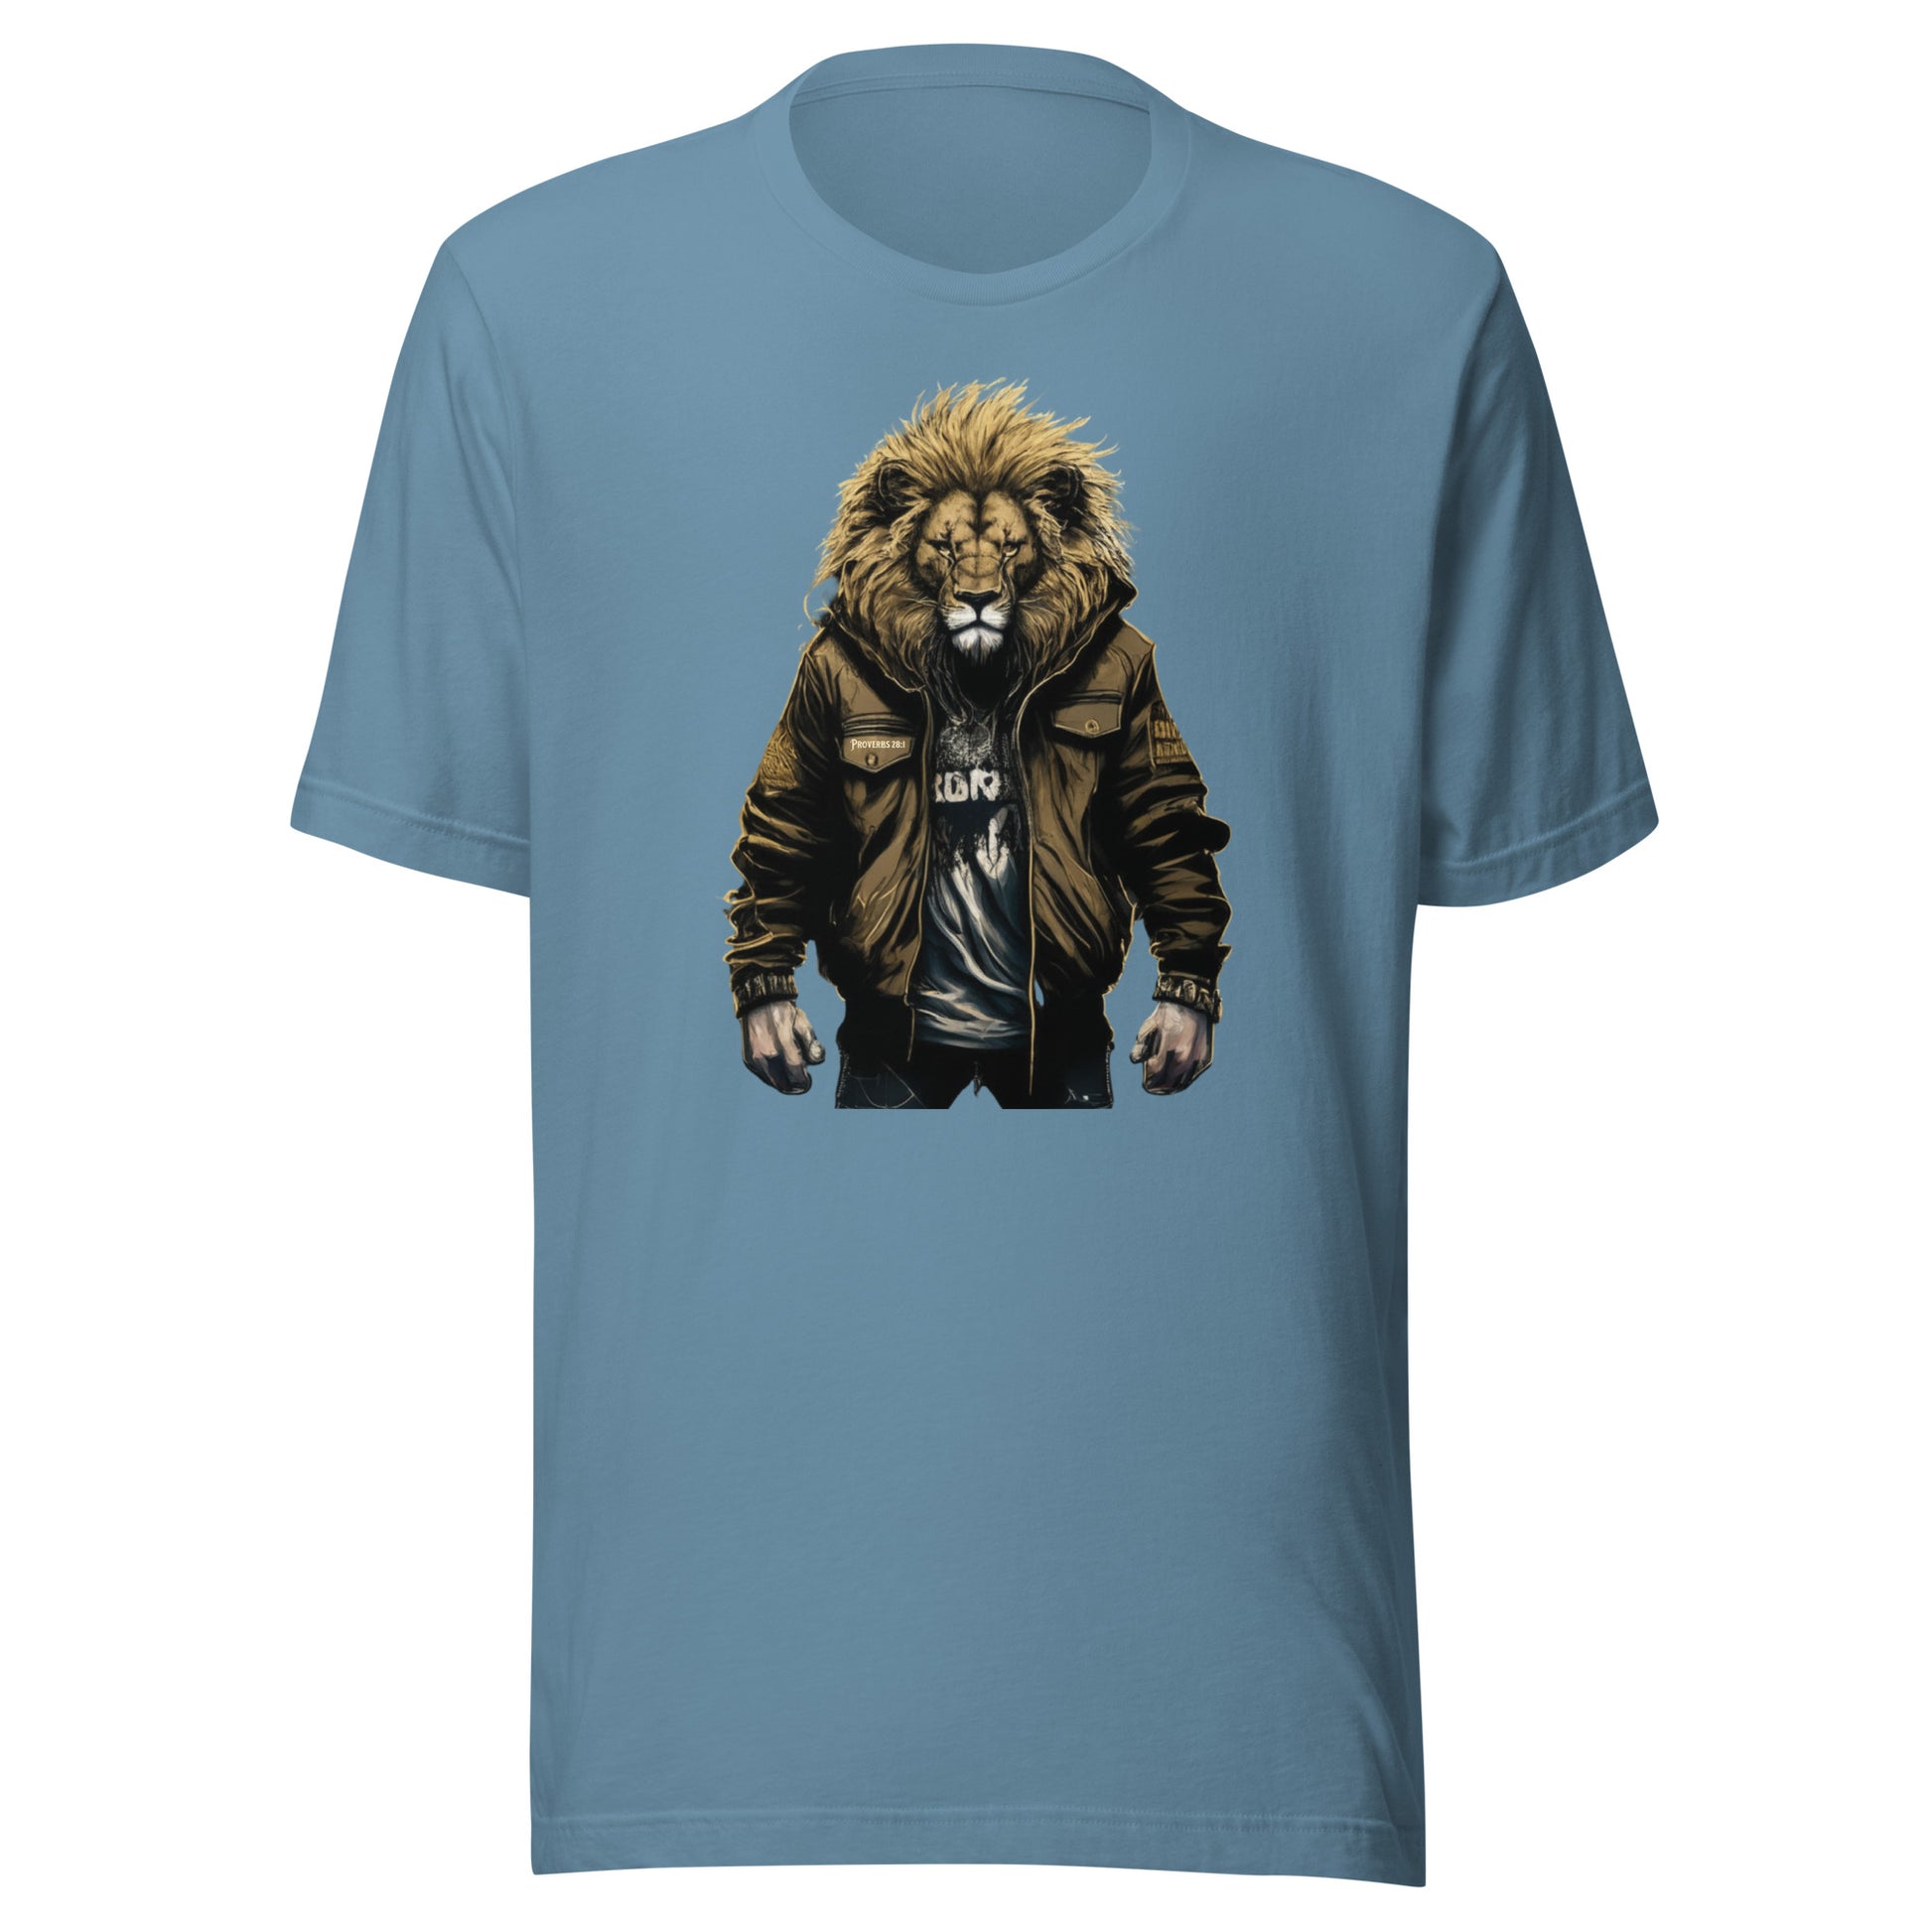 Bold Lion Men's Christian Graphic T-Shirt Steel Blue